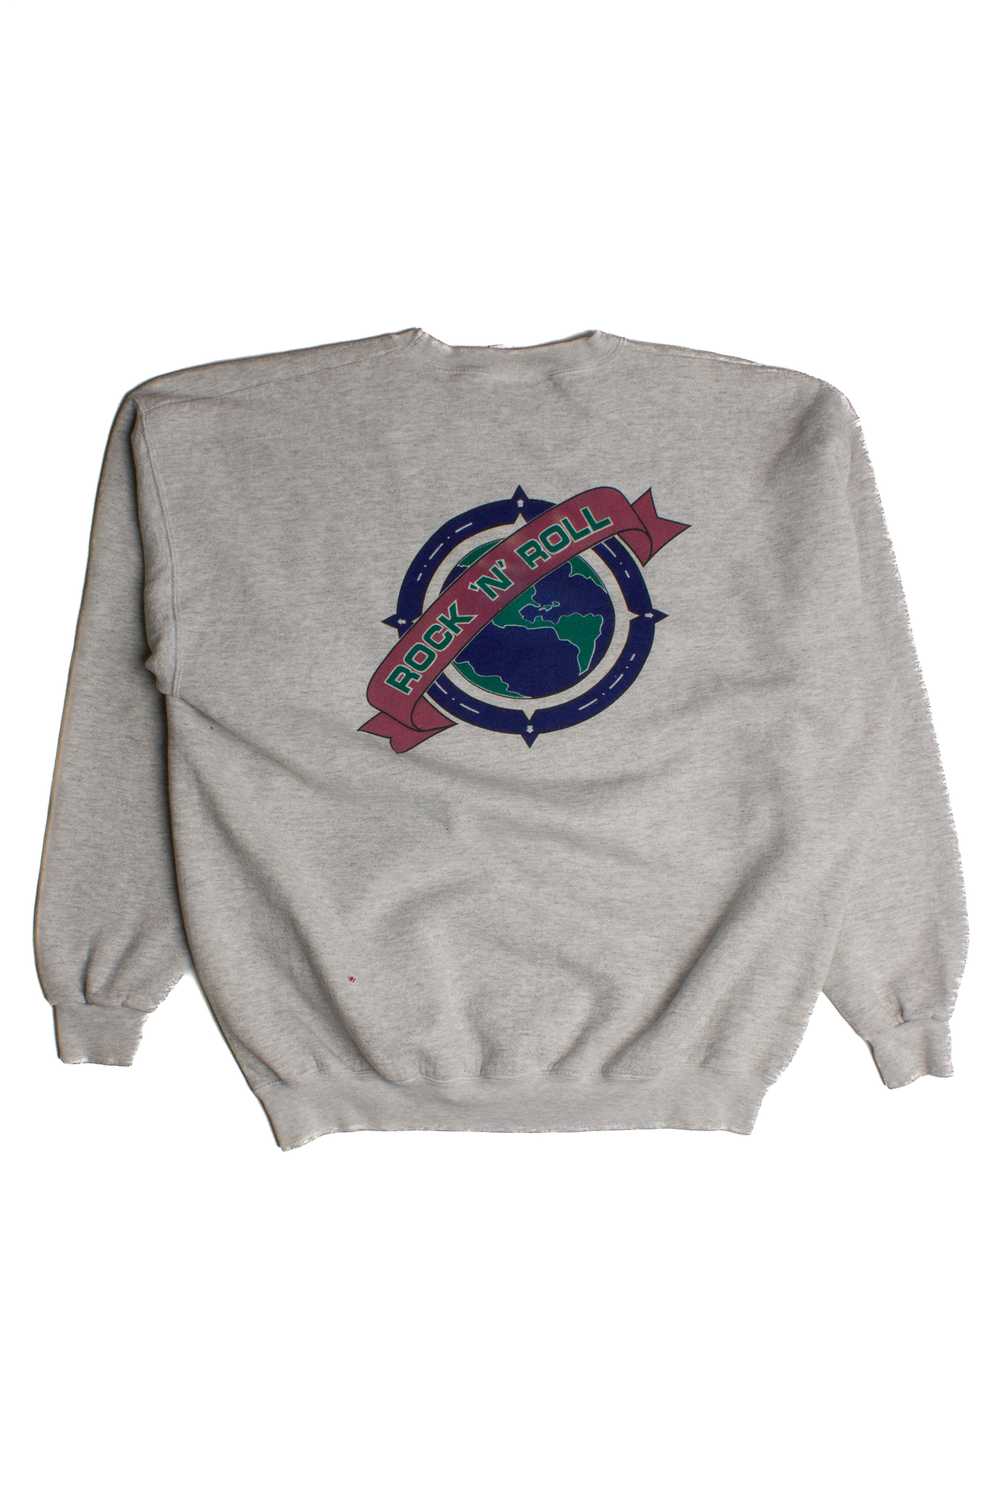 Vintage Hard Rock Cafe Sweatshirt (1990s)8801 - image 1